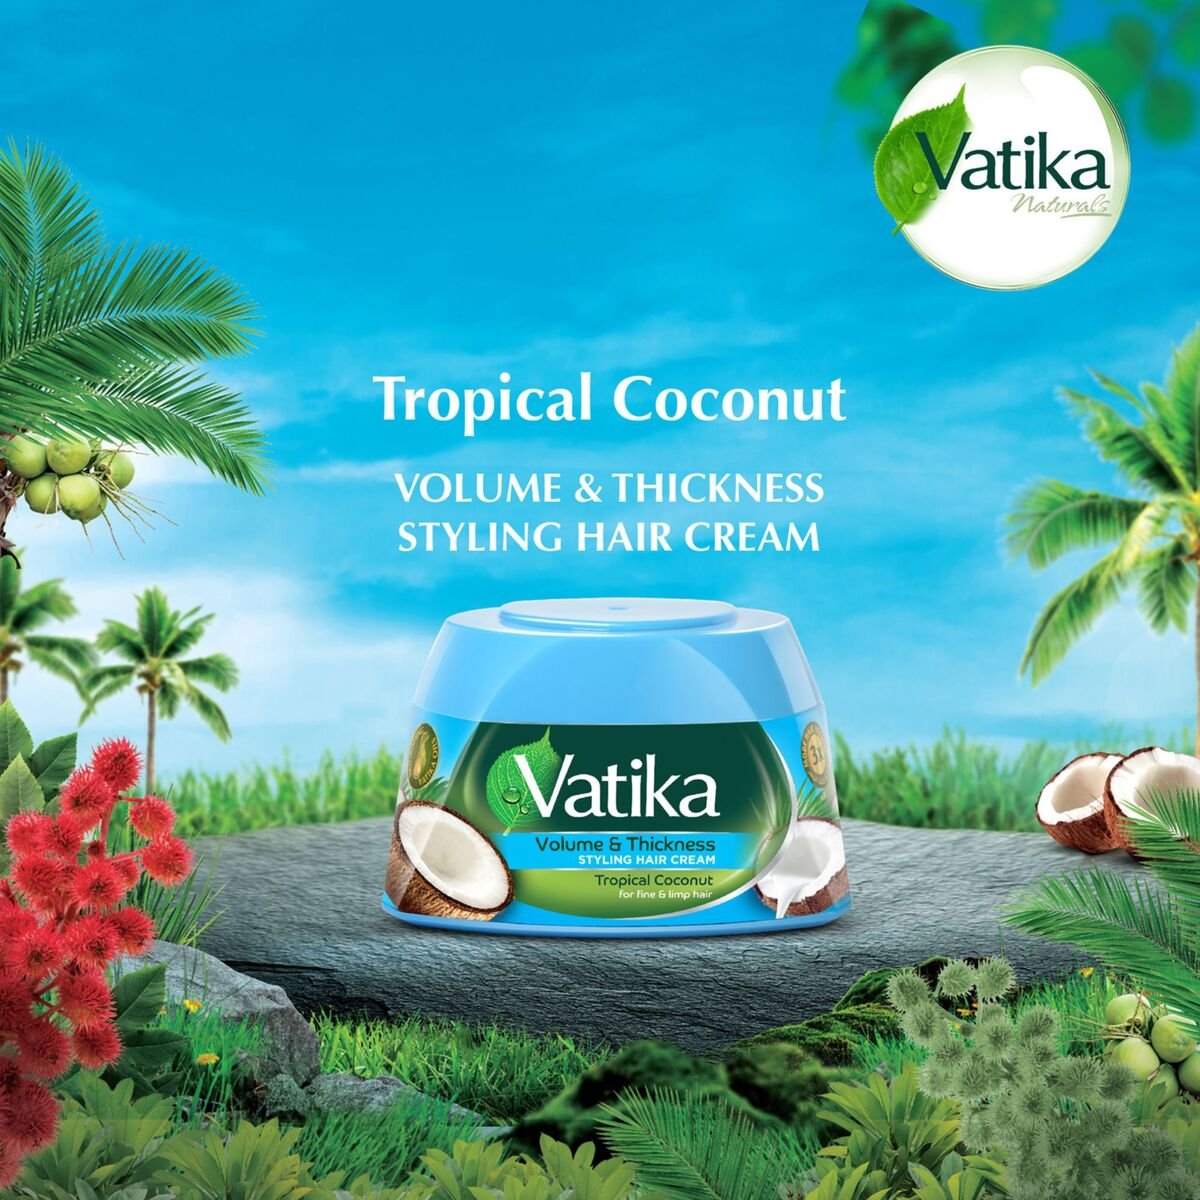 Vatika Volume & Thickness Styling Hair Cream Tropical Coconut 140 ml